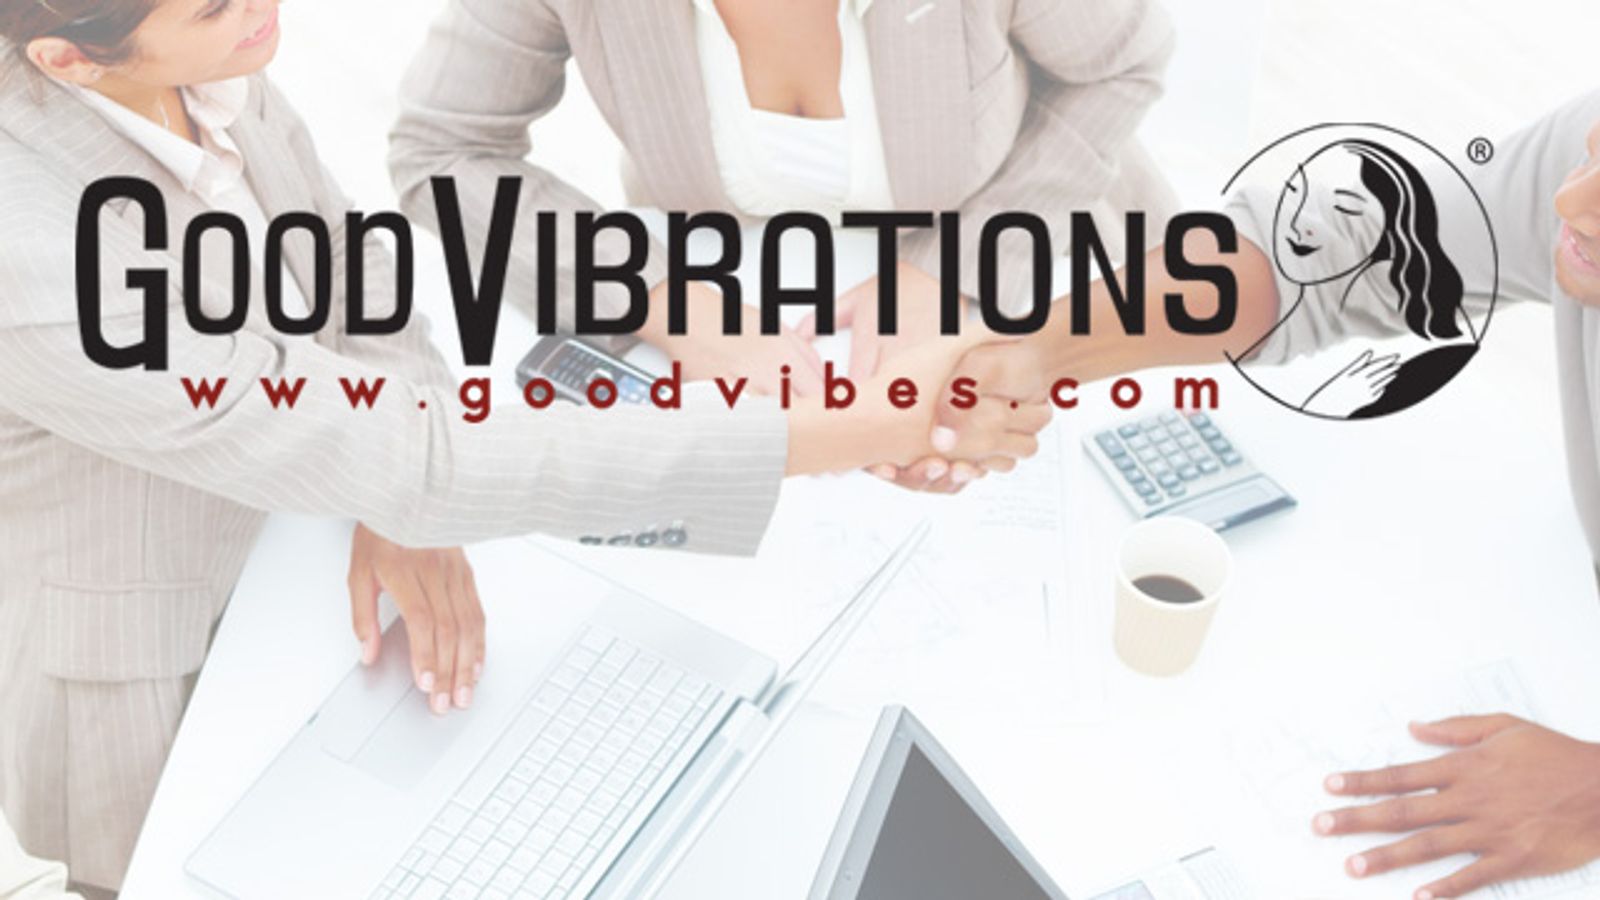 Good Vibrations Announces New COO